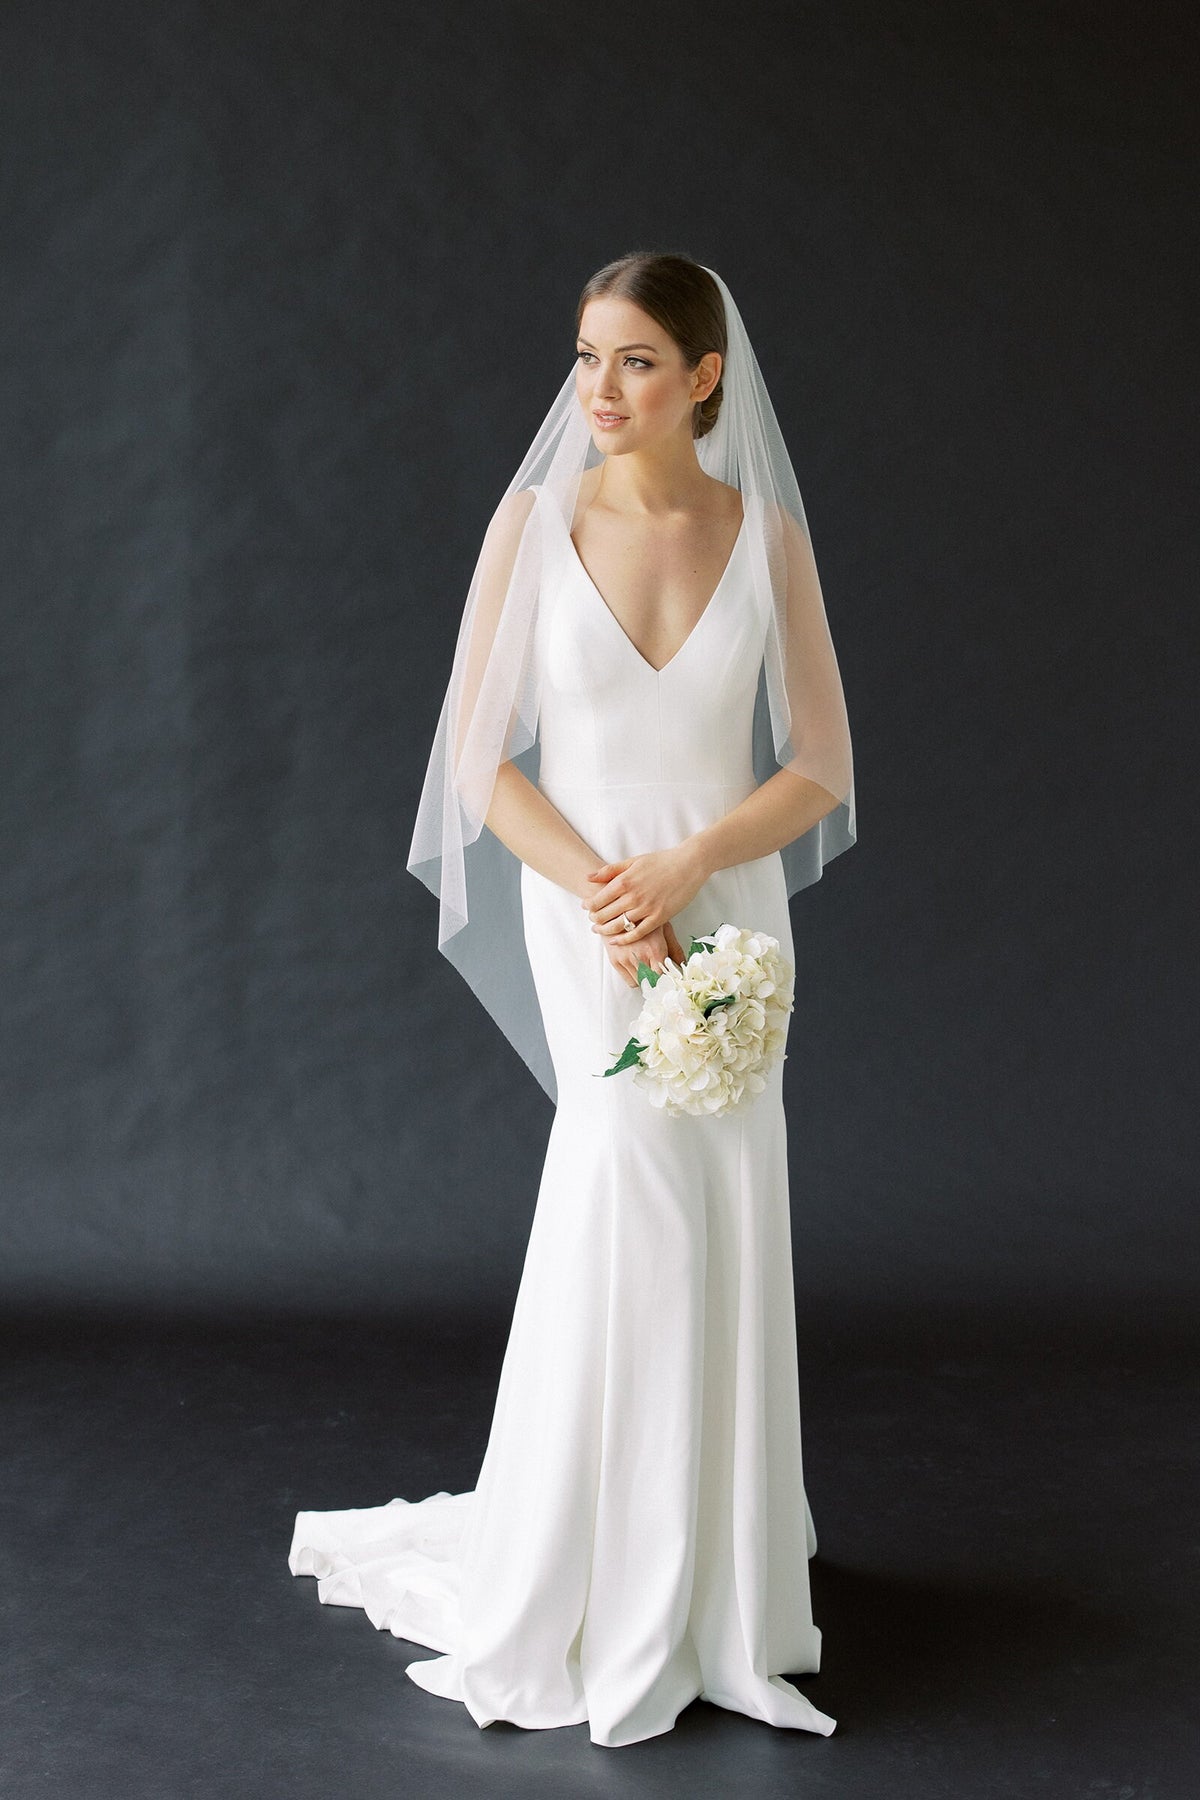 Bridal Veils Simple Wedding Veil Waltz Length Tapered Shape No Embellishments